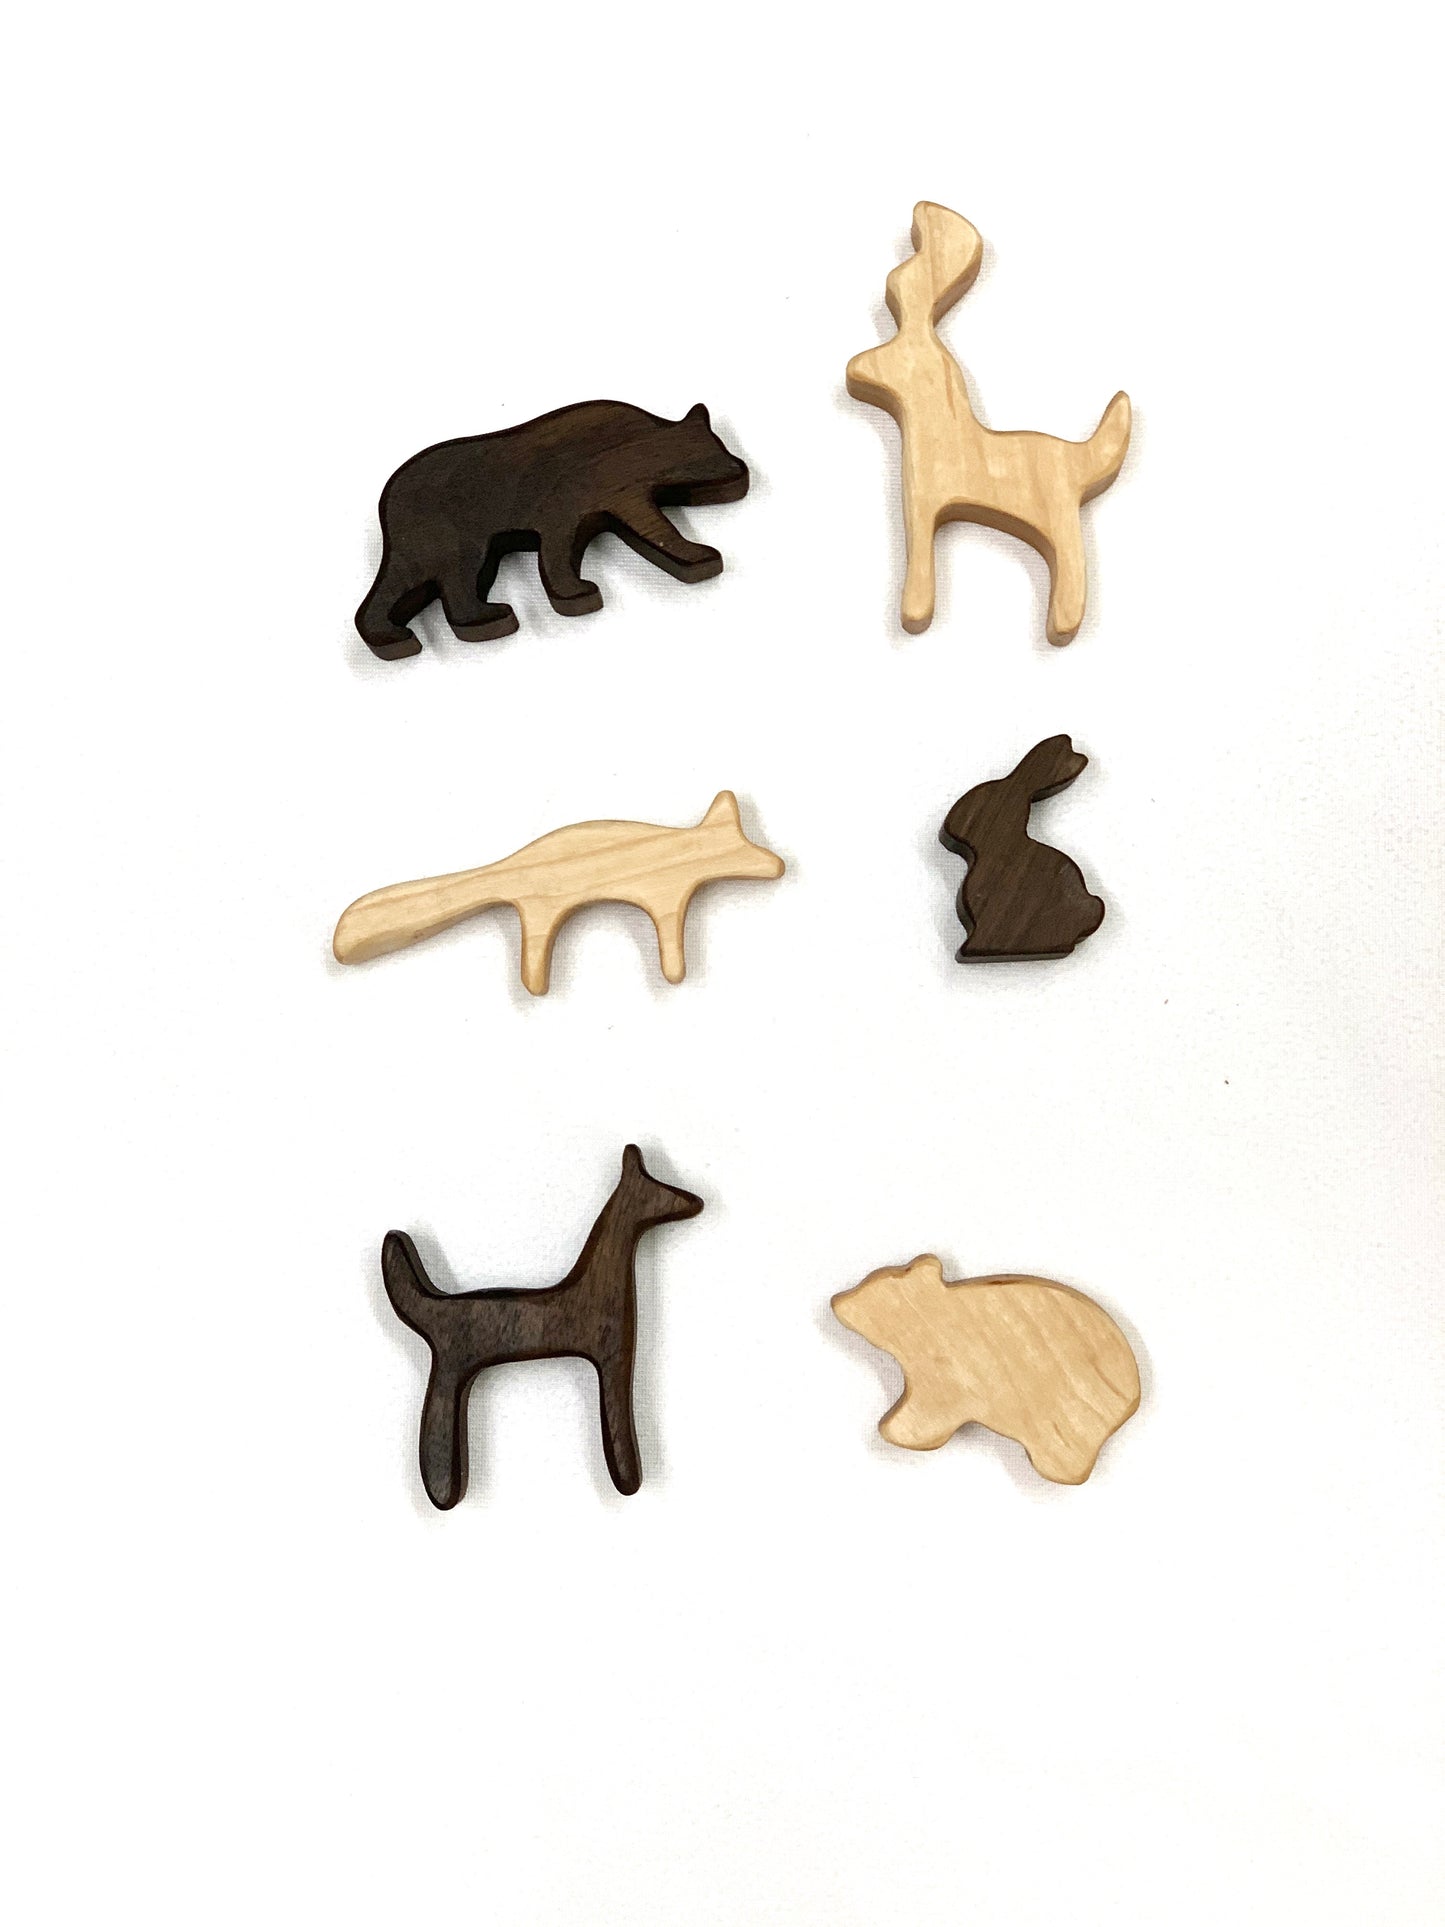 Doe Woodland Deer Animal Wood Toy Figurines